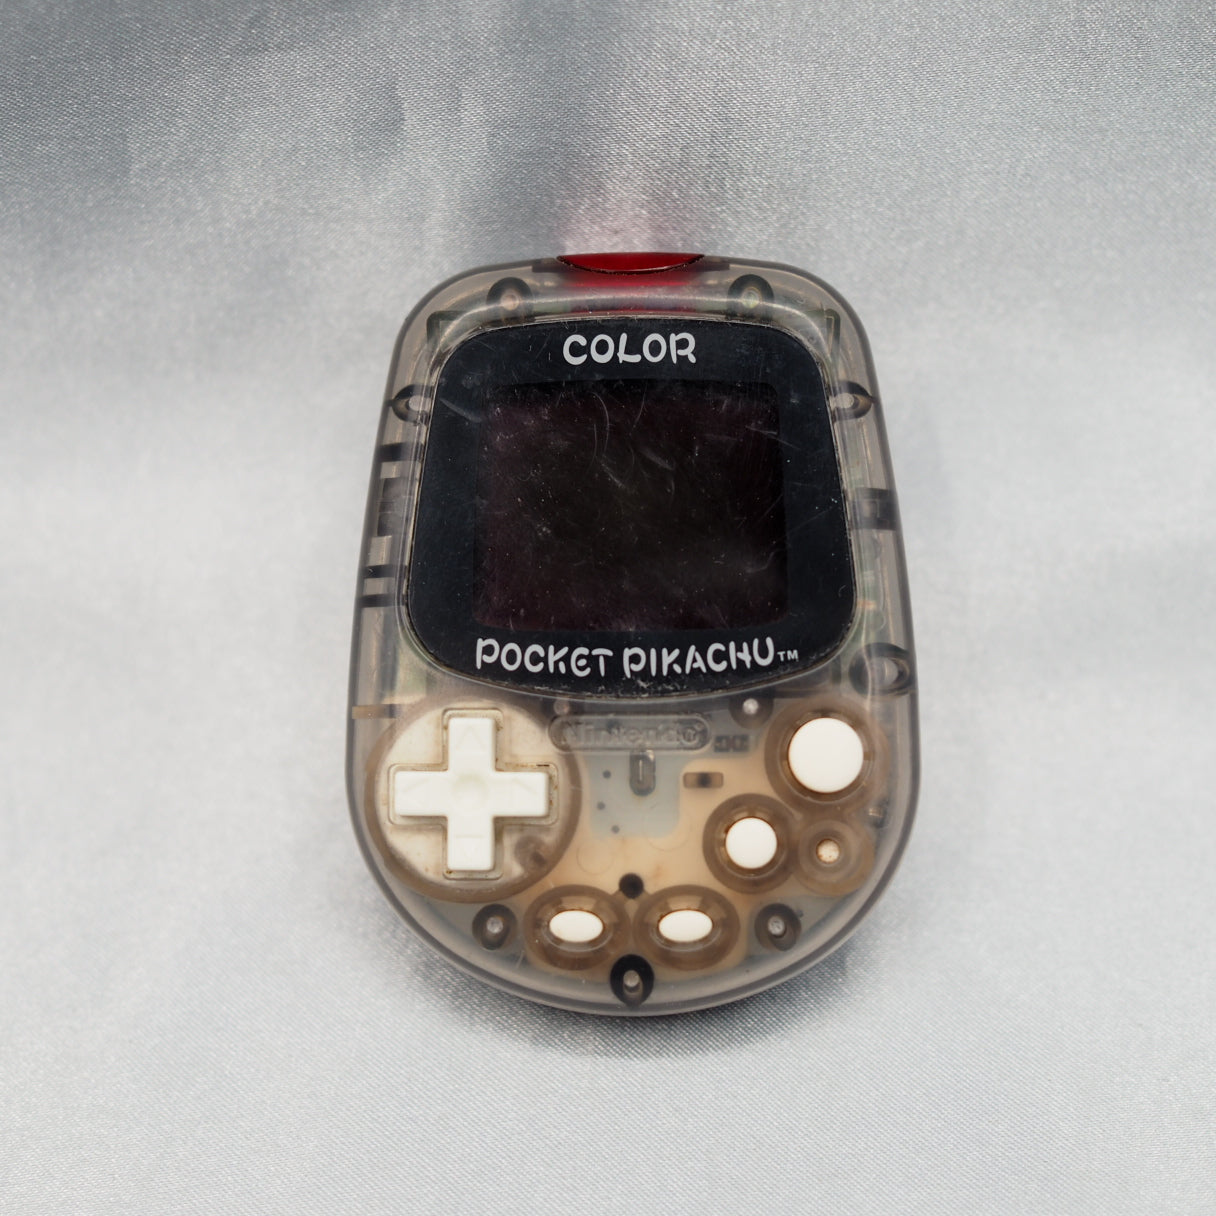 [JUNK] Nintendo Pocket Pikachu Color Console